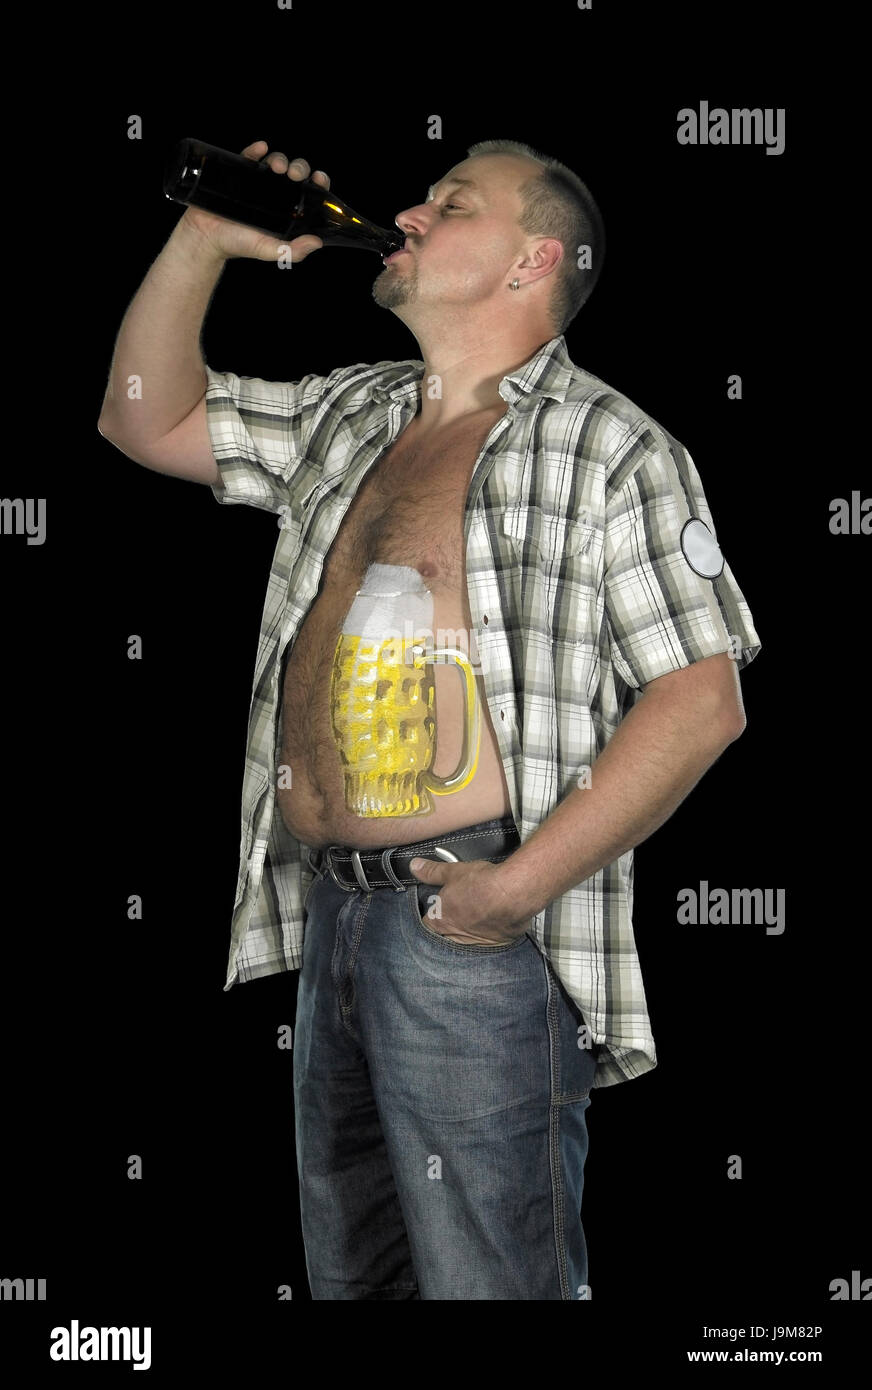 men, man, drink, drinking, bibs, art, beer, shirt, belly, tummy, beer bottle, Stock Photo